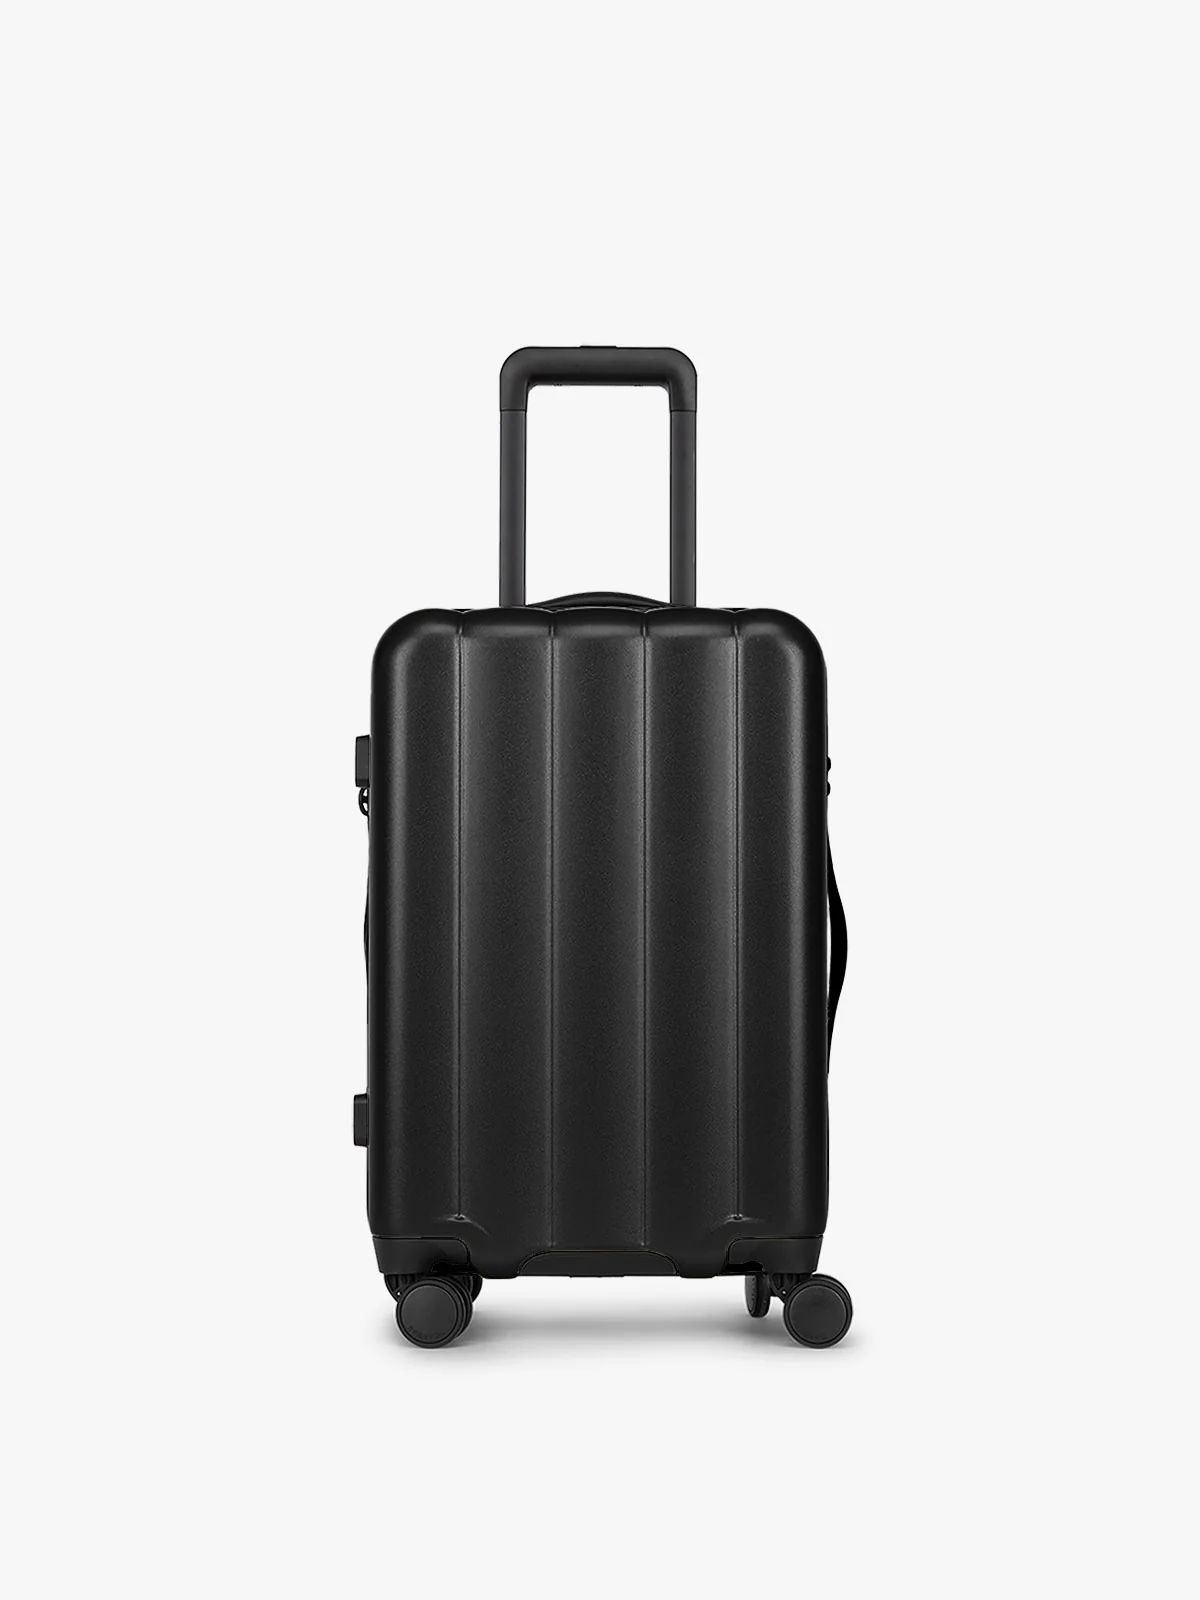 Evry Carry-On Luggage | CALPAK | CALPAK Travel